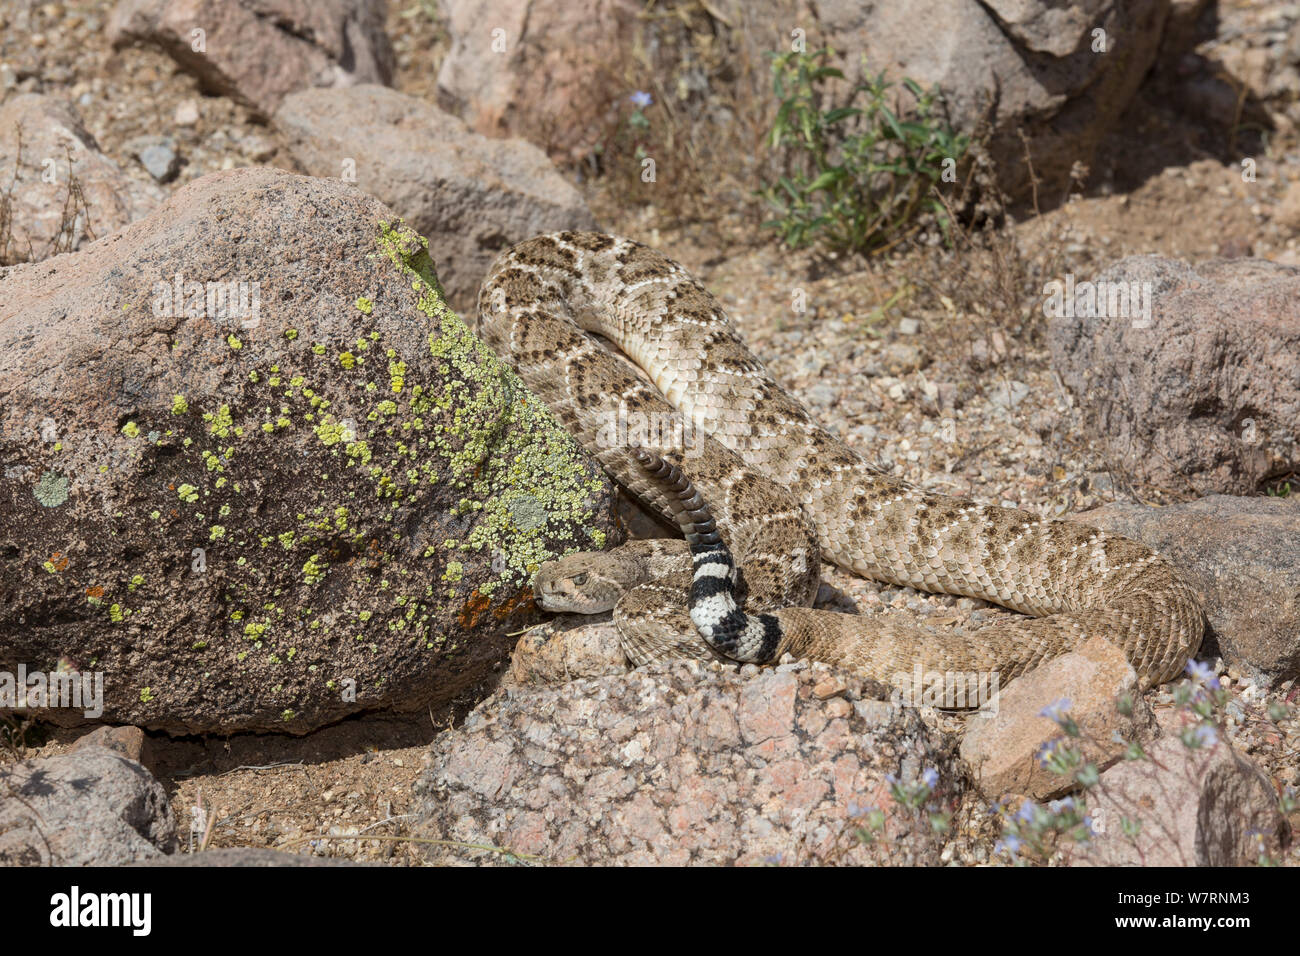 Western Diamondback Rattlesnake (Crotalus atrox) by a patch of Miniature Woolystar (Eriastrum diffusum) in the Sonoran Desert, Mesa, Arizona, USA Stock Photo